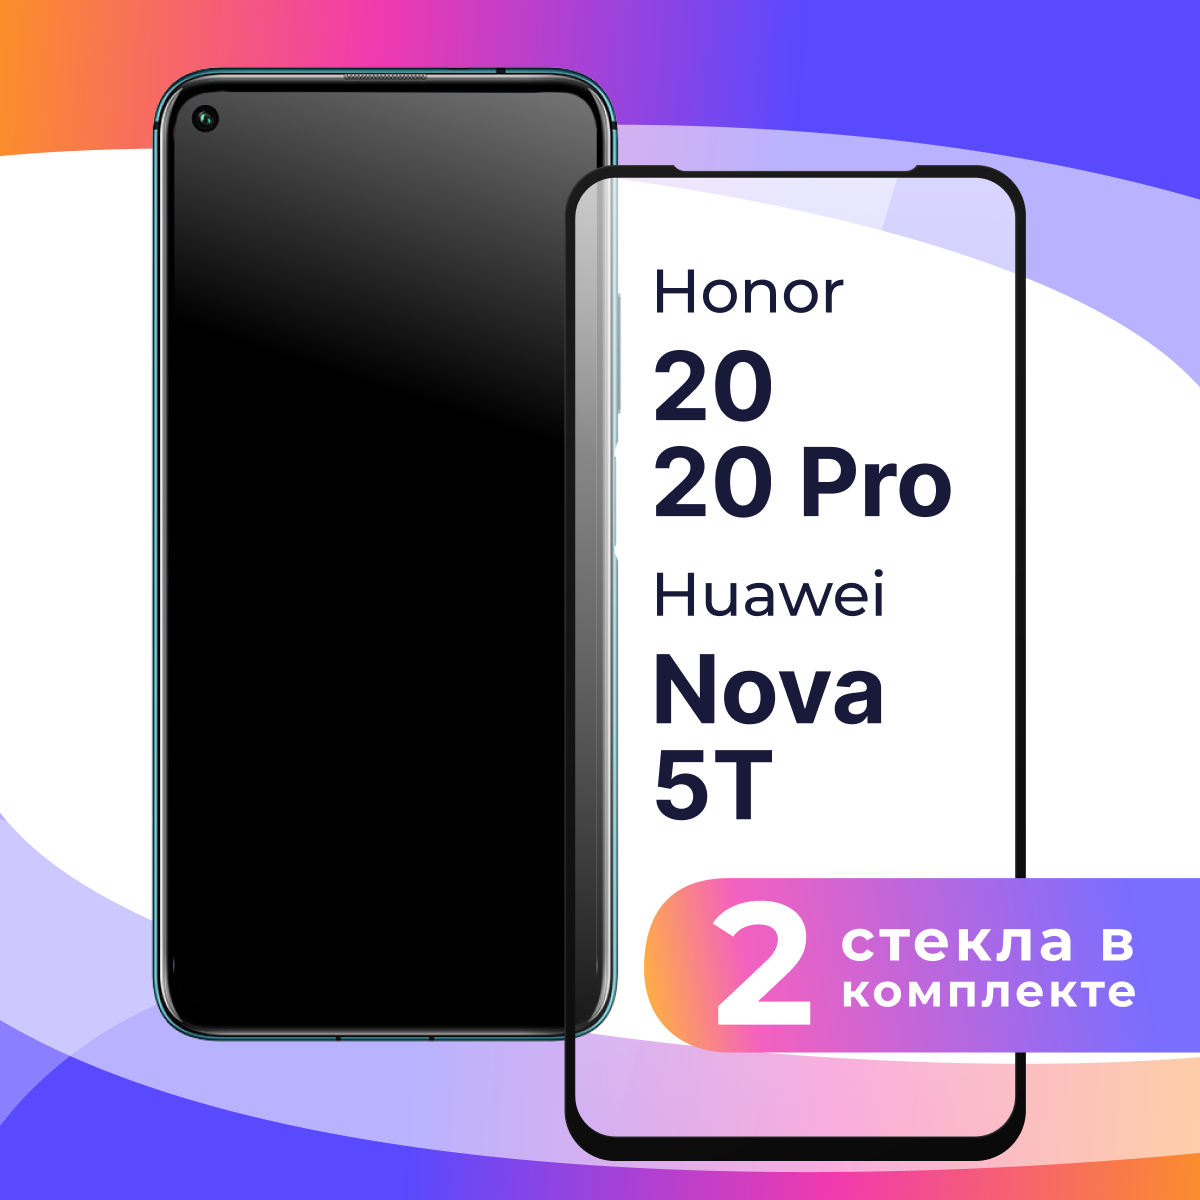 Комплект 2 шт. Защитное стекло для телефона Honor 20 20 Pro Huawei Nova 5T / Противоударное стекло на Хонор 20 20 Про и Хуавей Нова 5Т / Прозрачное